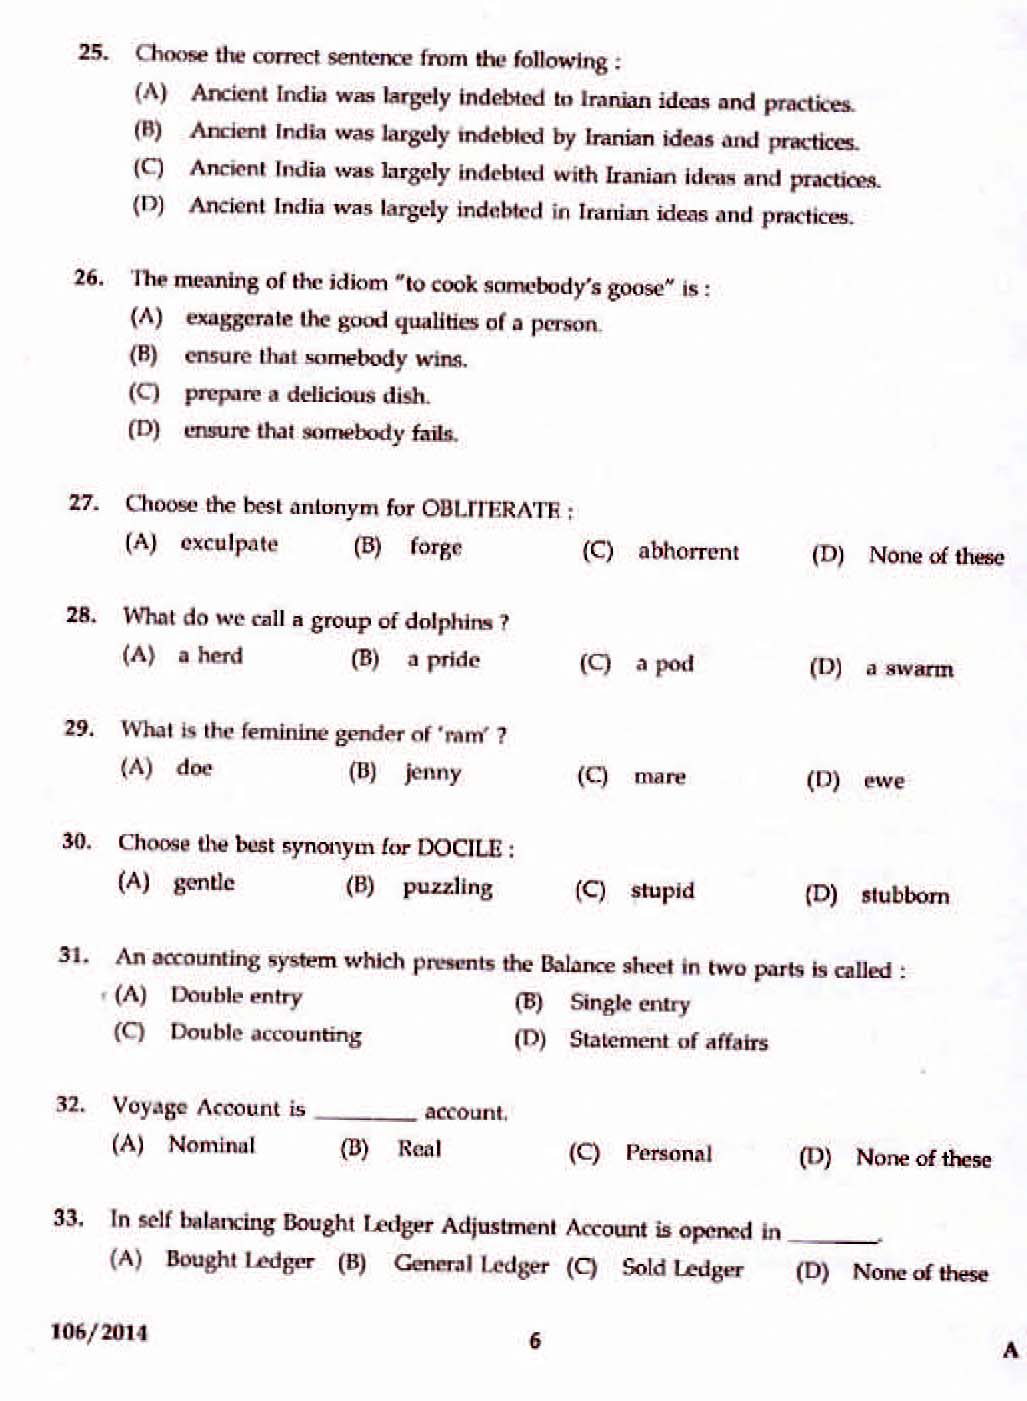 Kerala PSC Divisional Accountant OMR Exam 2014 Question Paper Code 1062014 4